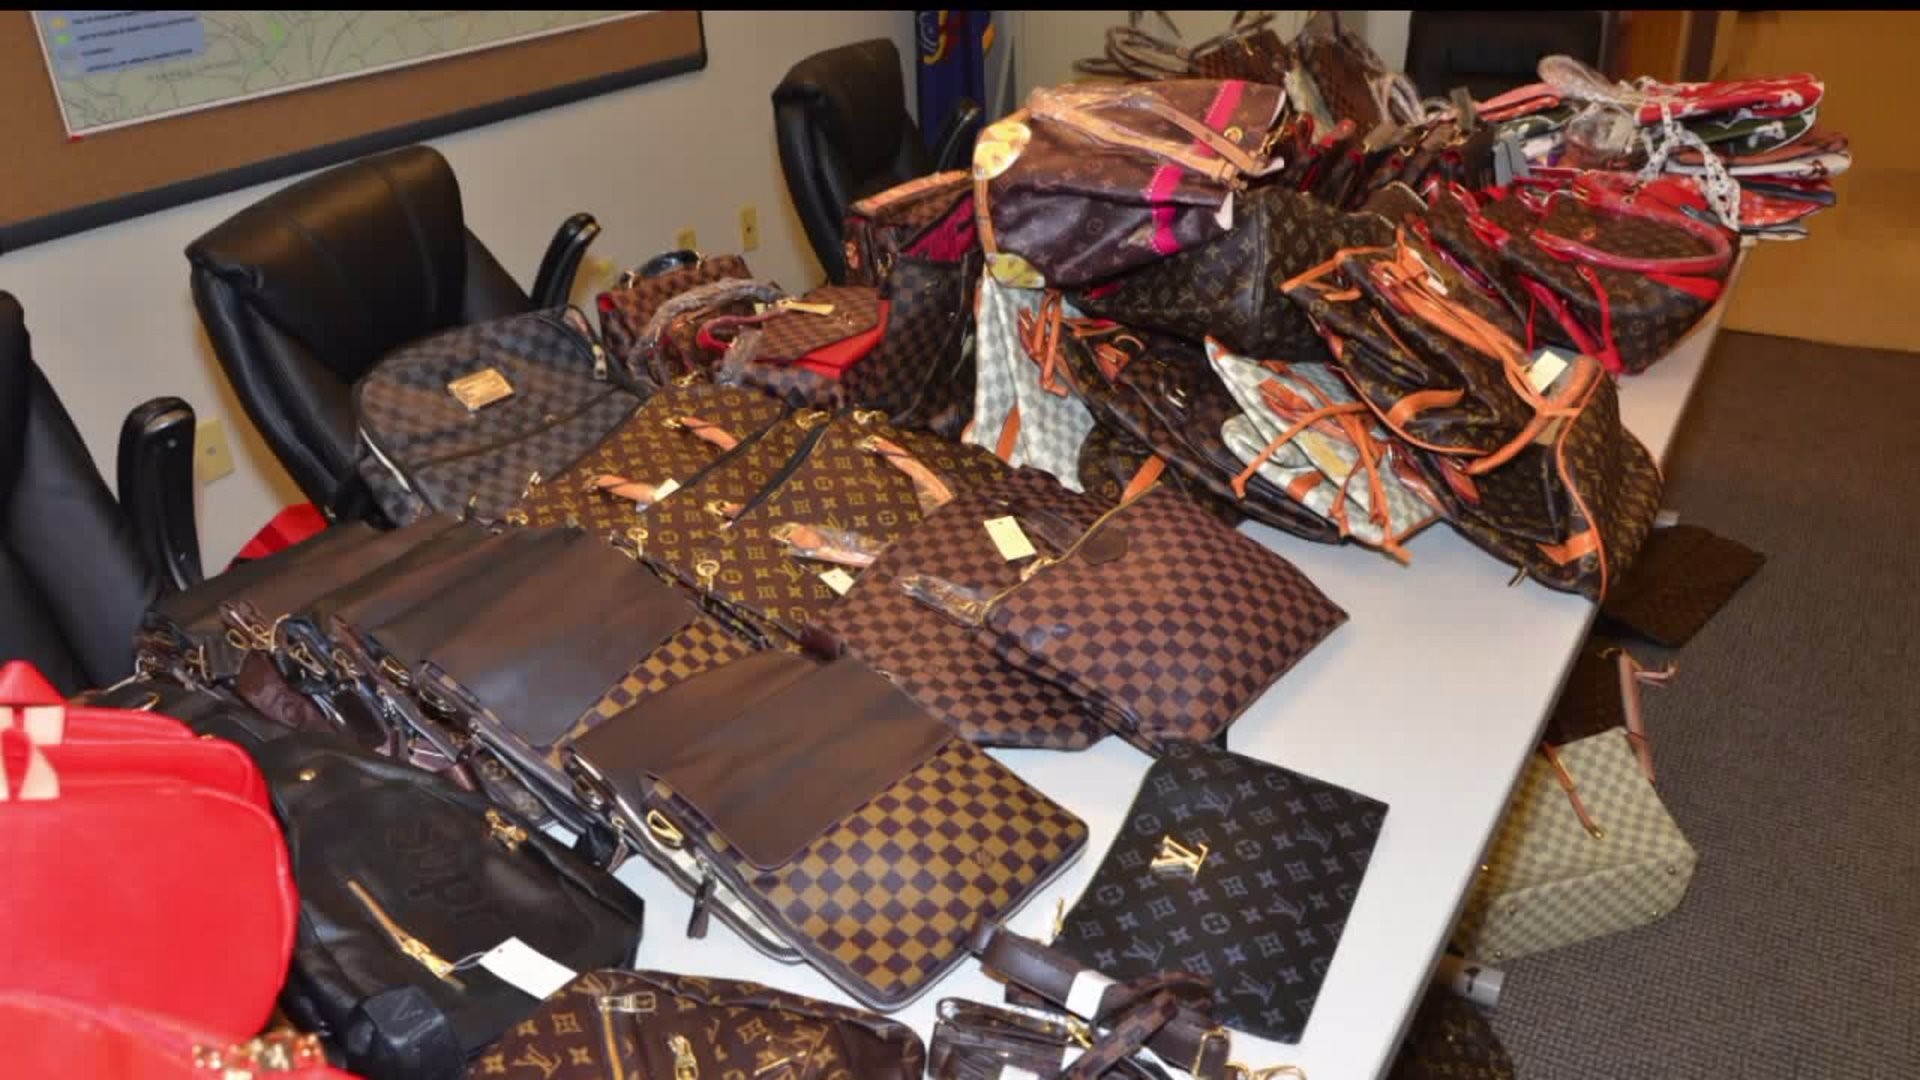 This Louis Vuitton Handbag Sale Might Break the Internet